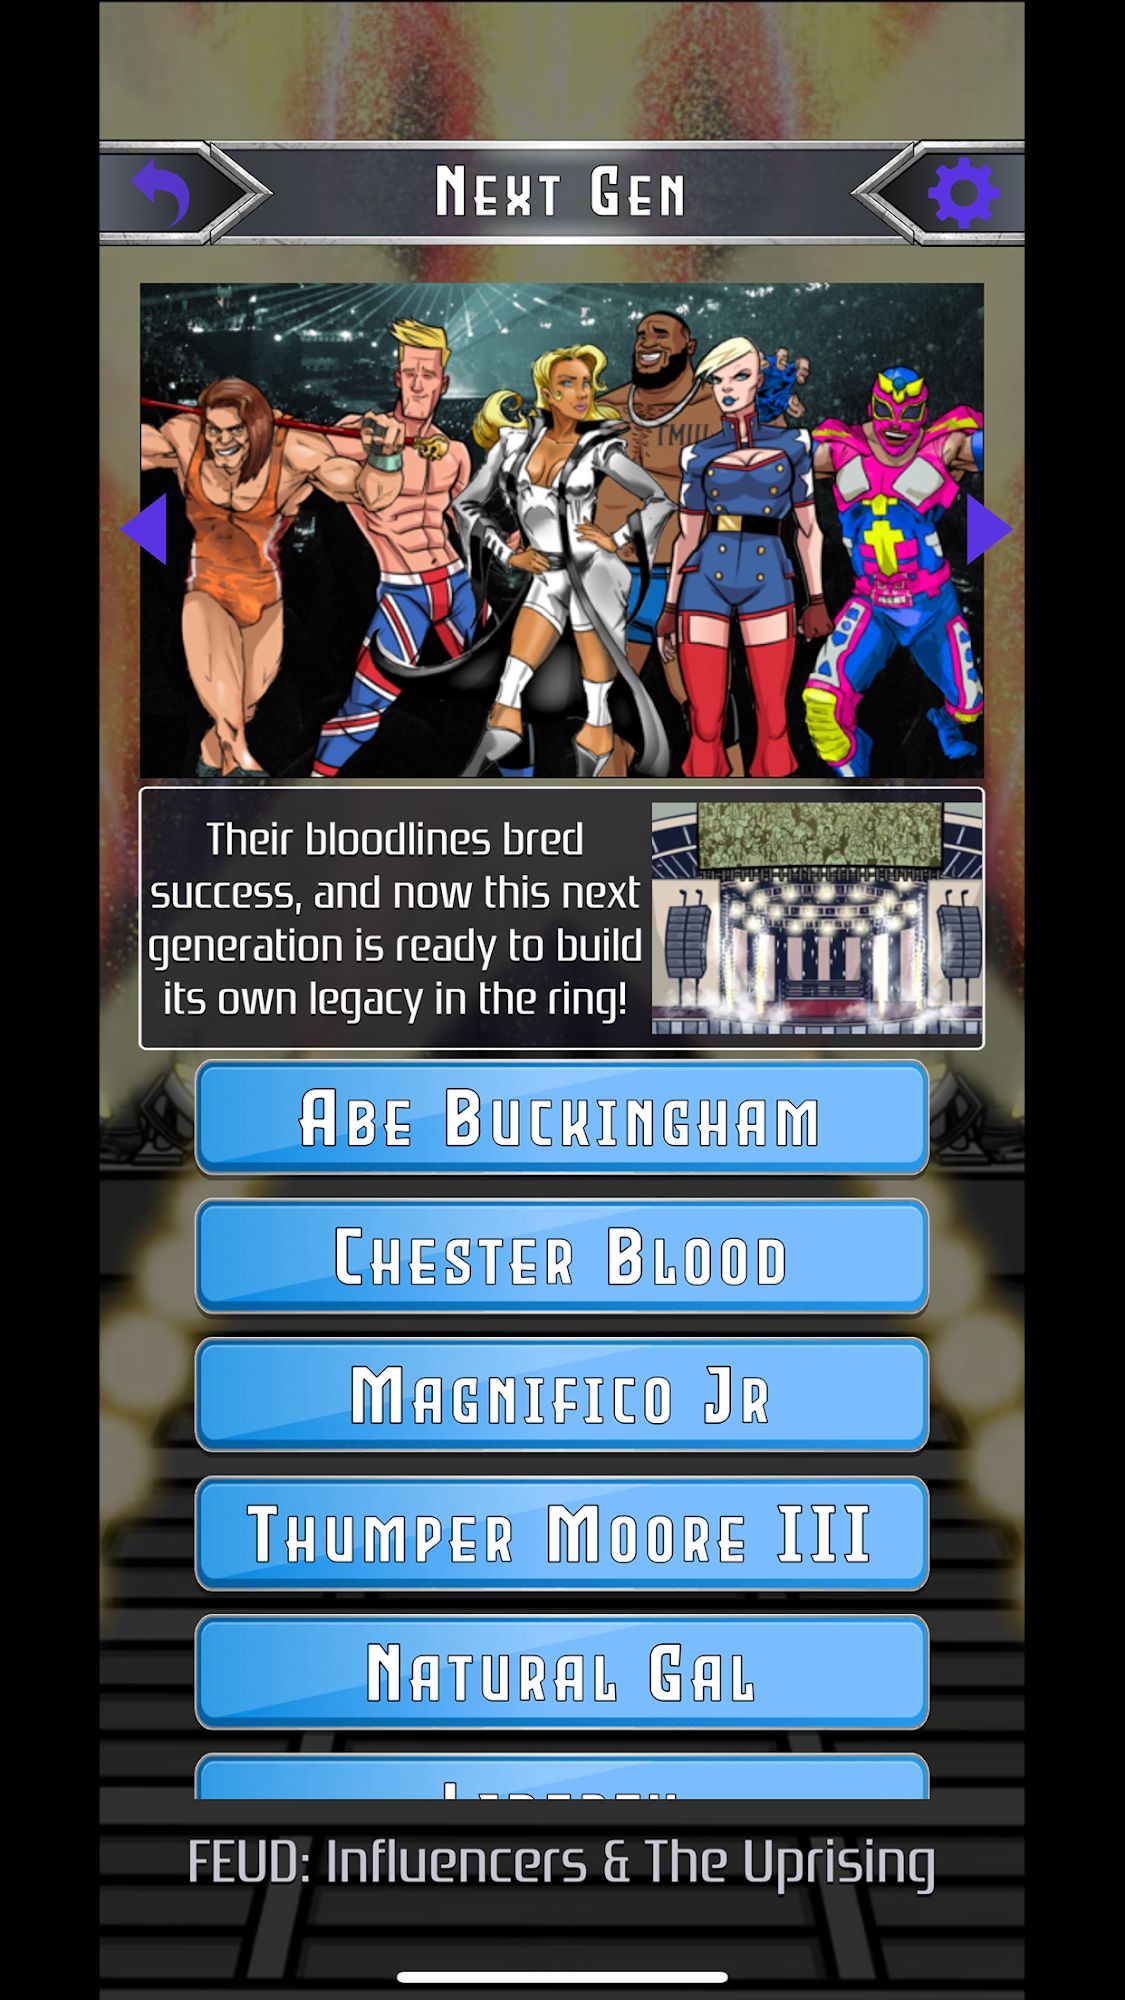 Modern Mania Wrestling GM captura de pantalla 1